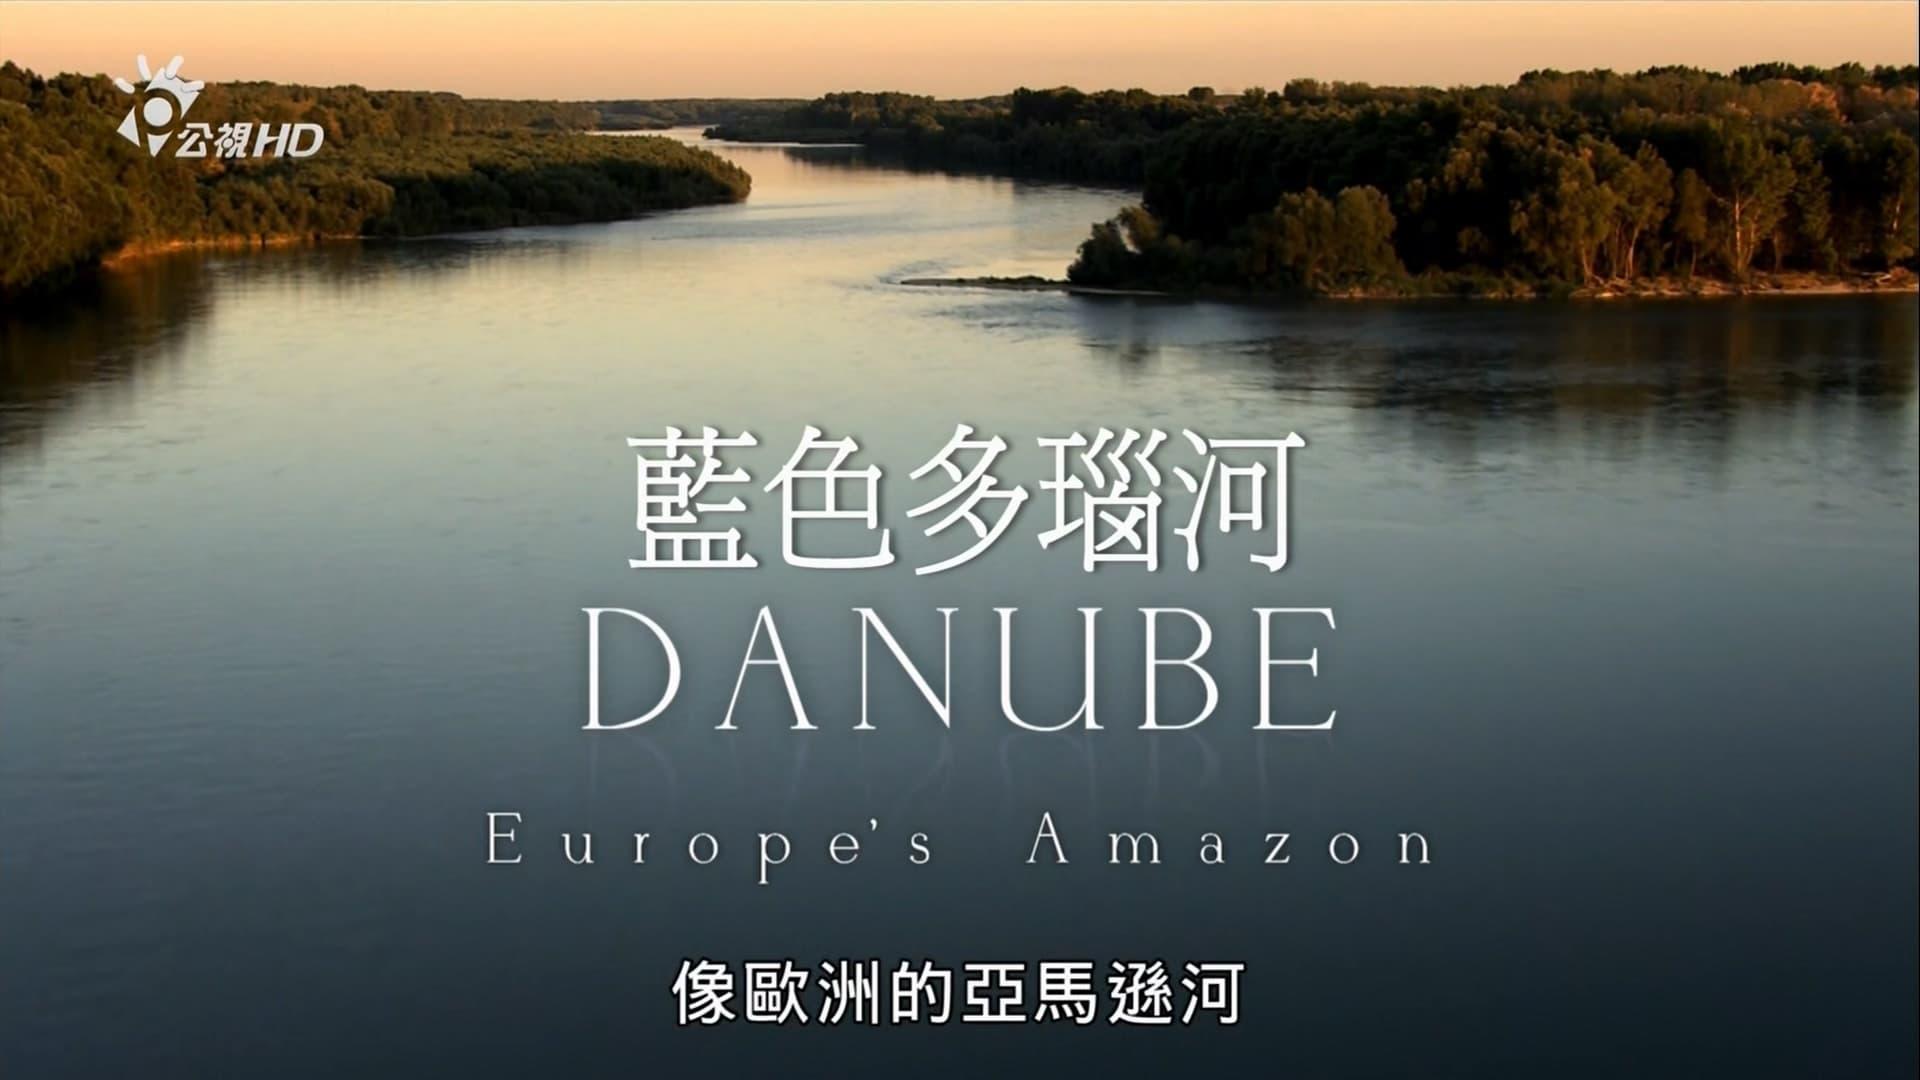 Danube: Europe's Amazon backdrop